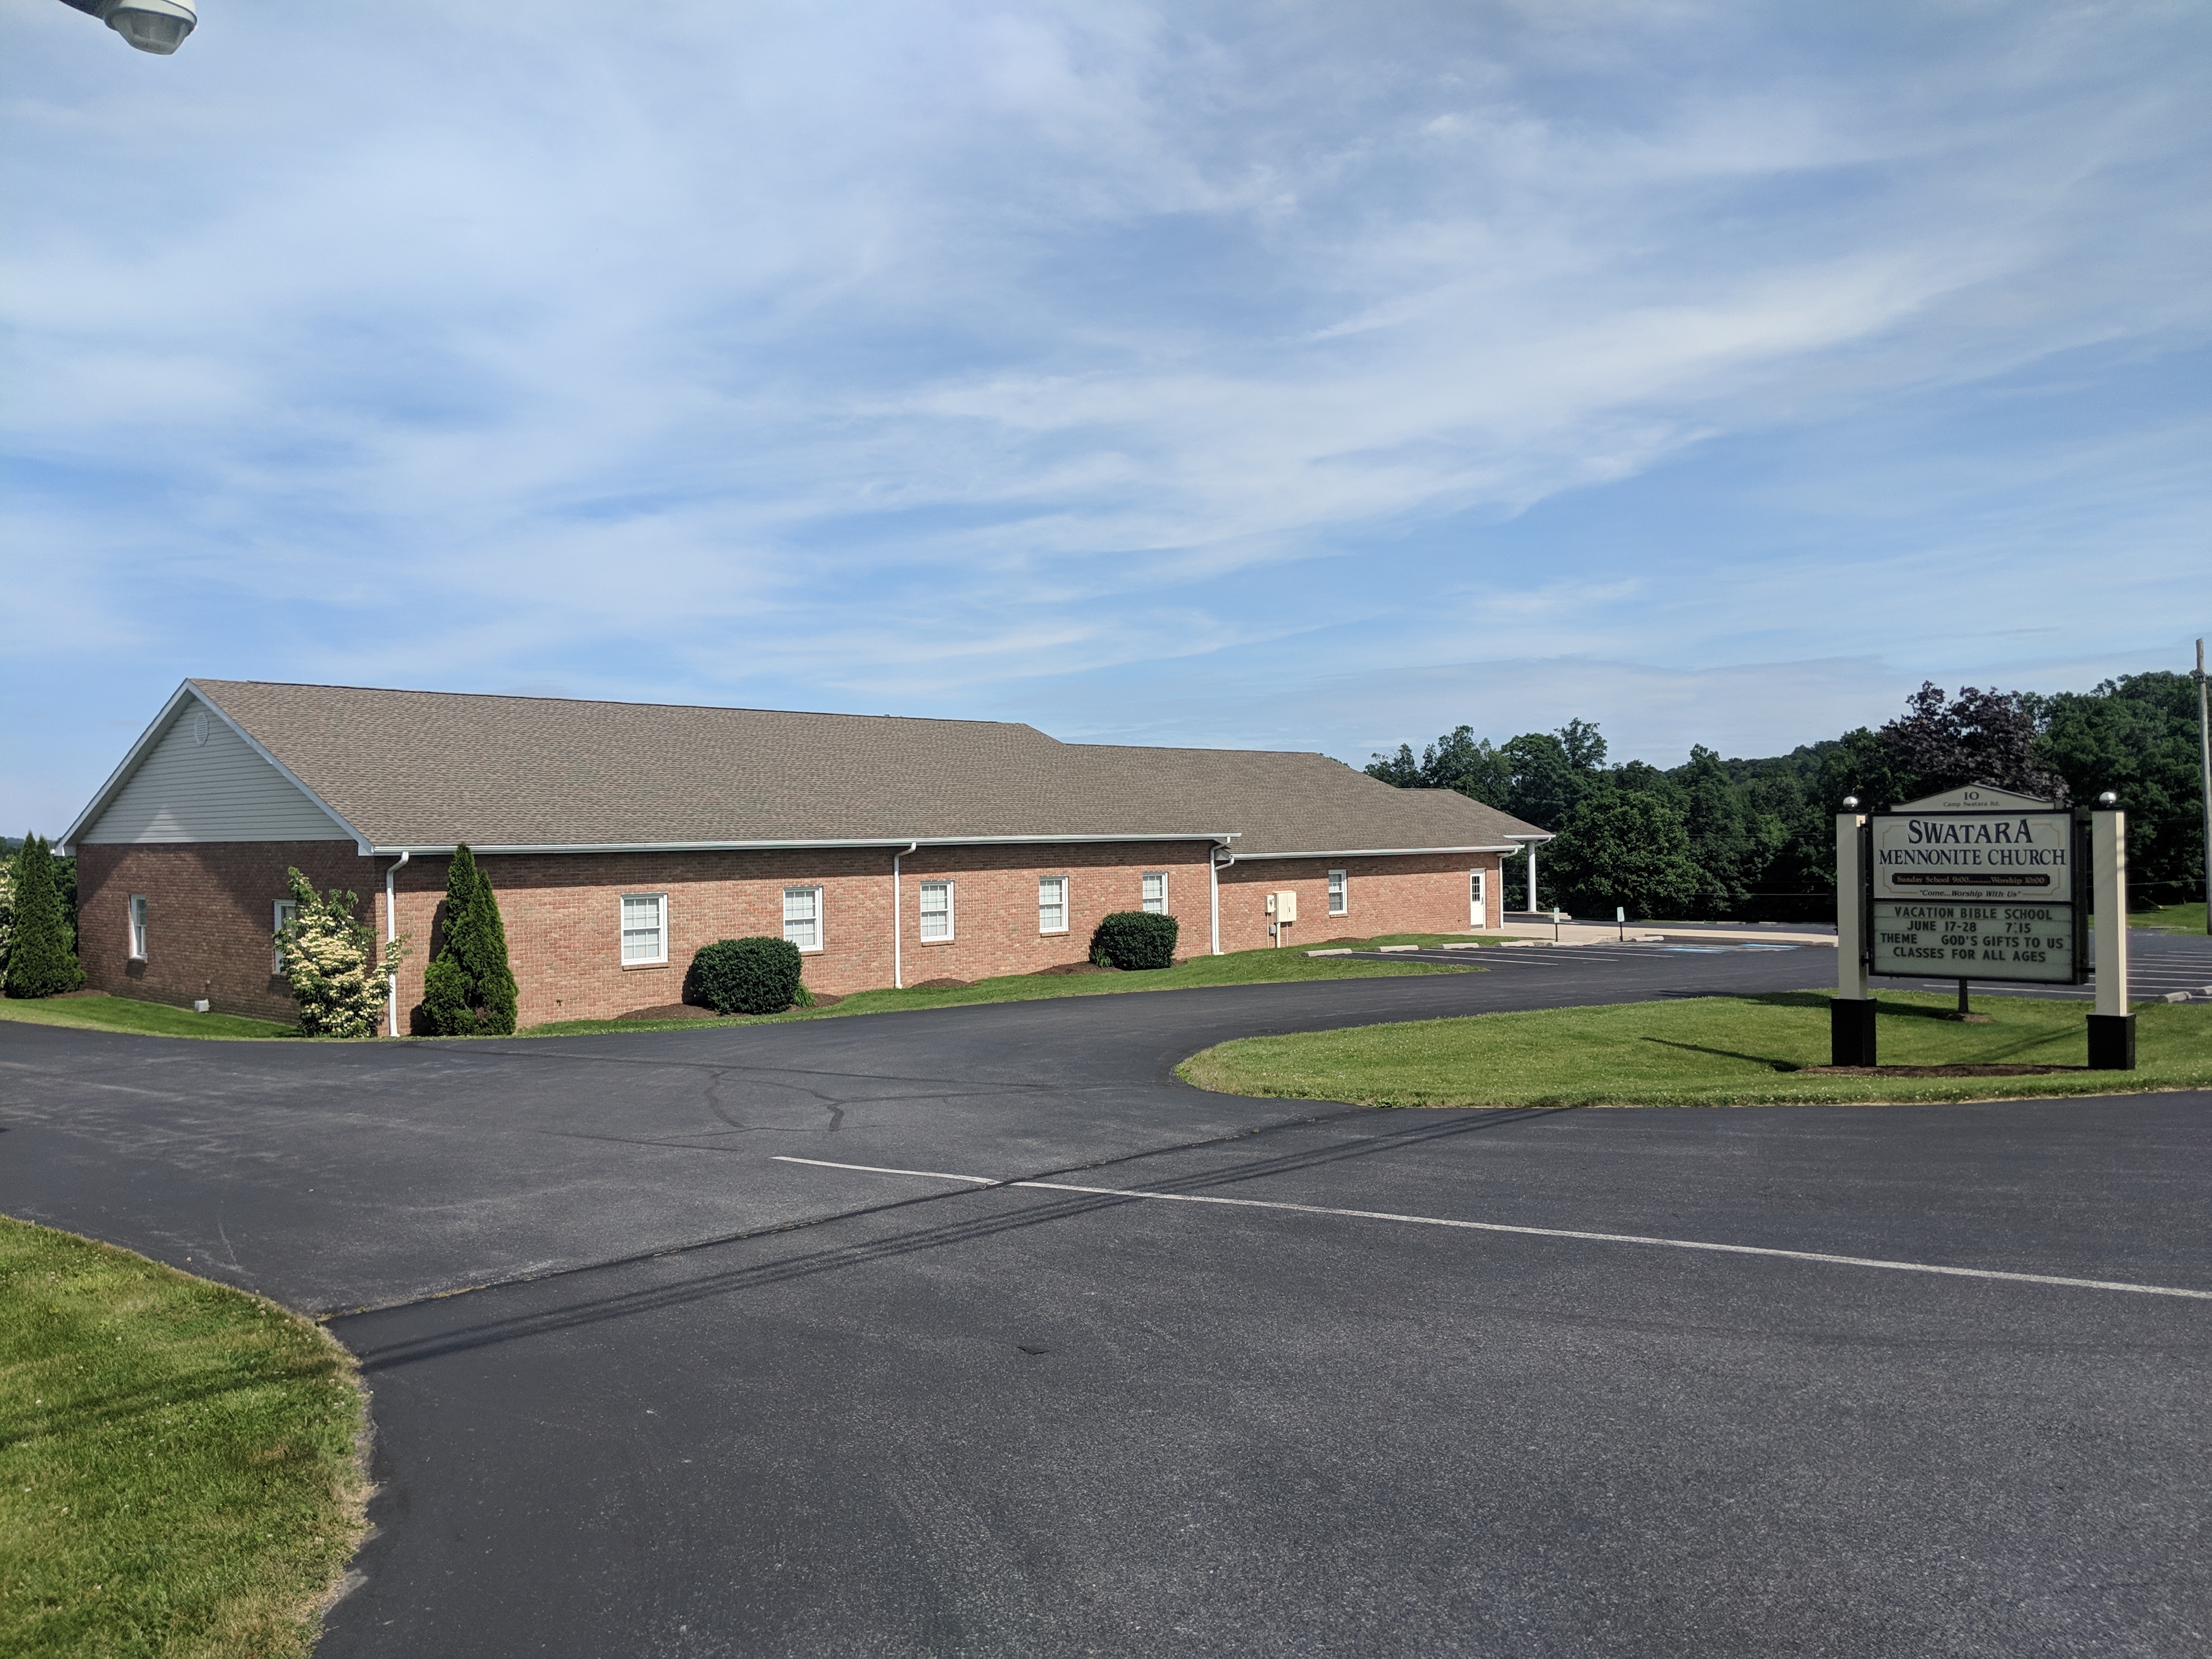 Swatara Mennonite Meeting House